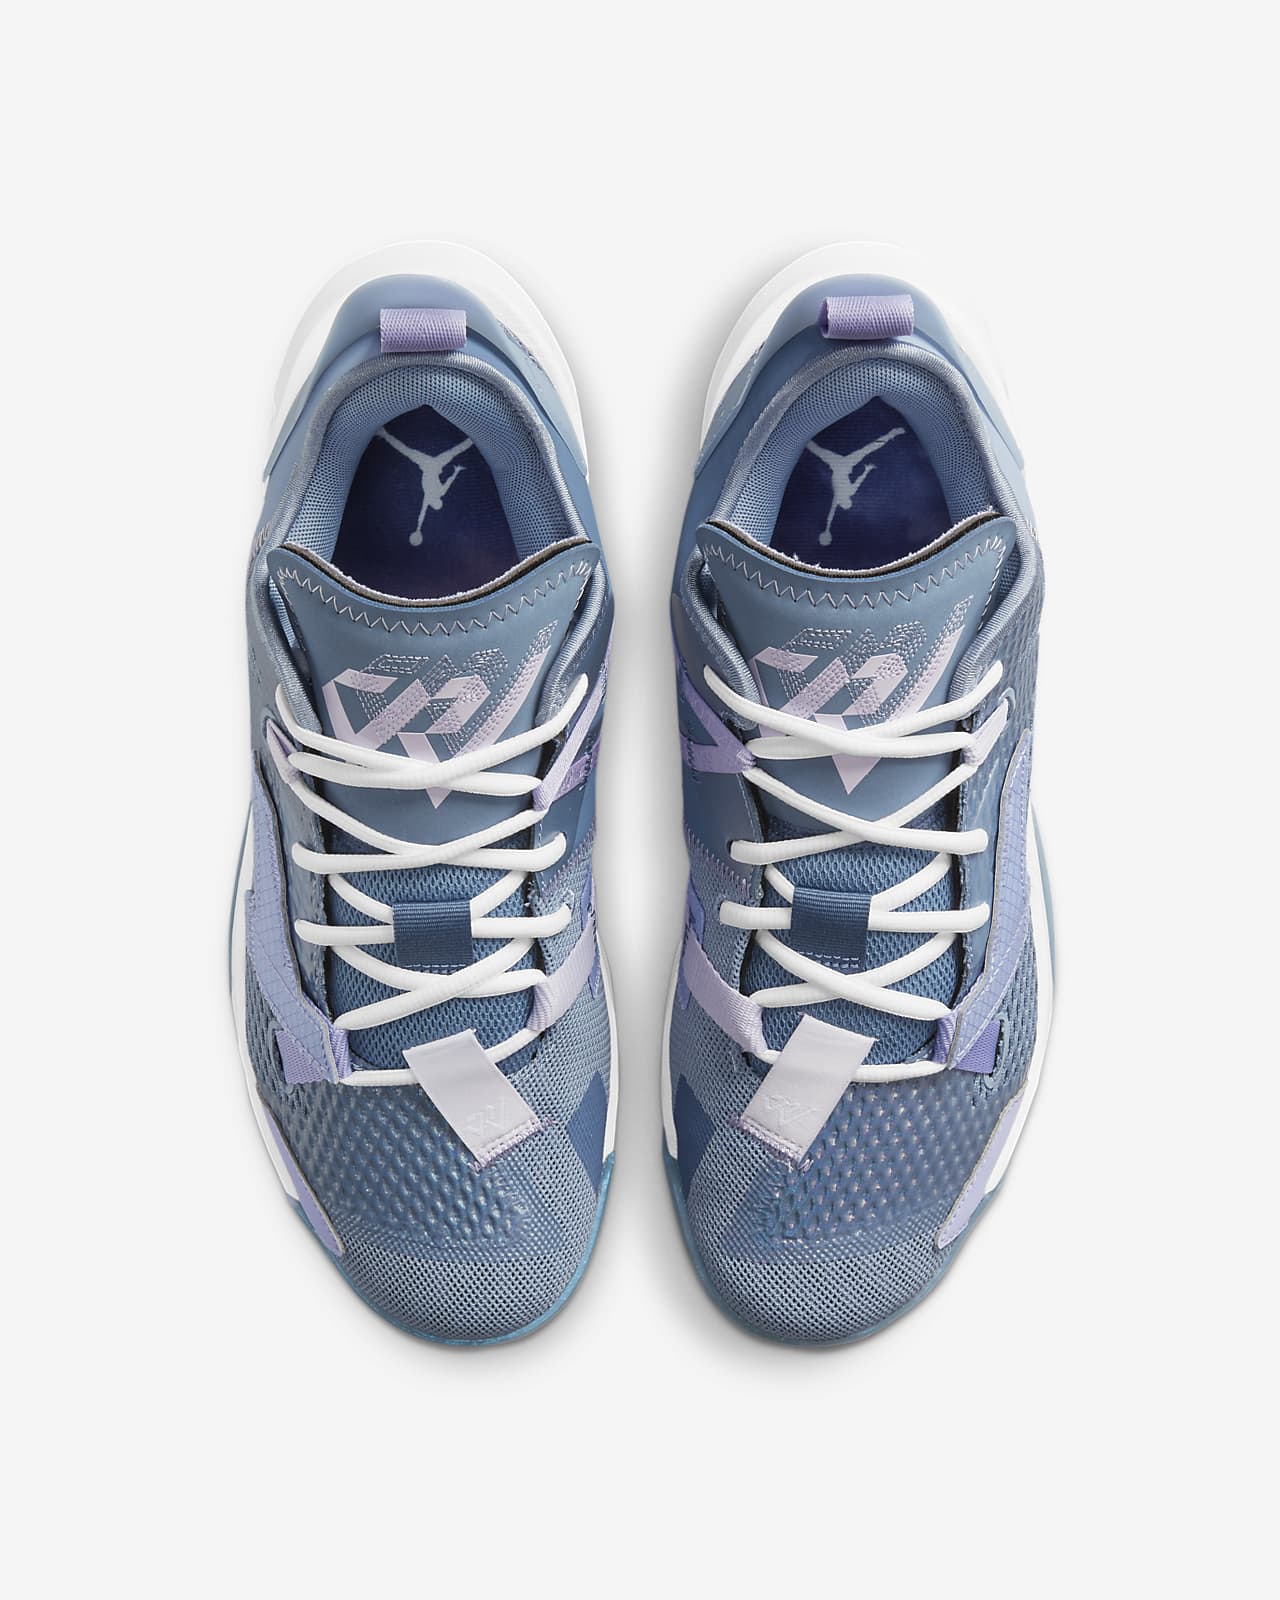 Jordan Why Not Zer0.4 PF 男子篮球鞋-耐克(Nike)中国官网